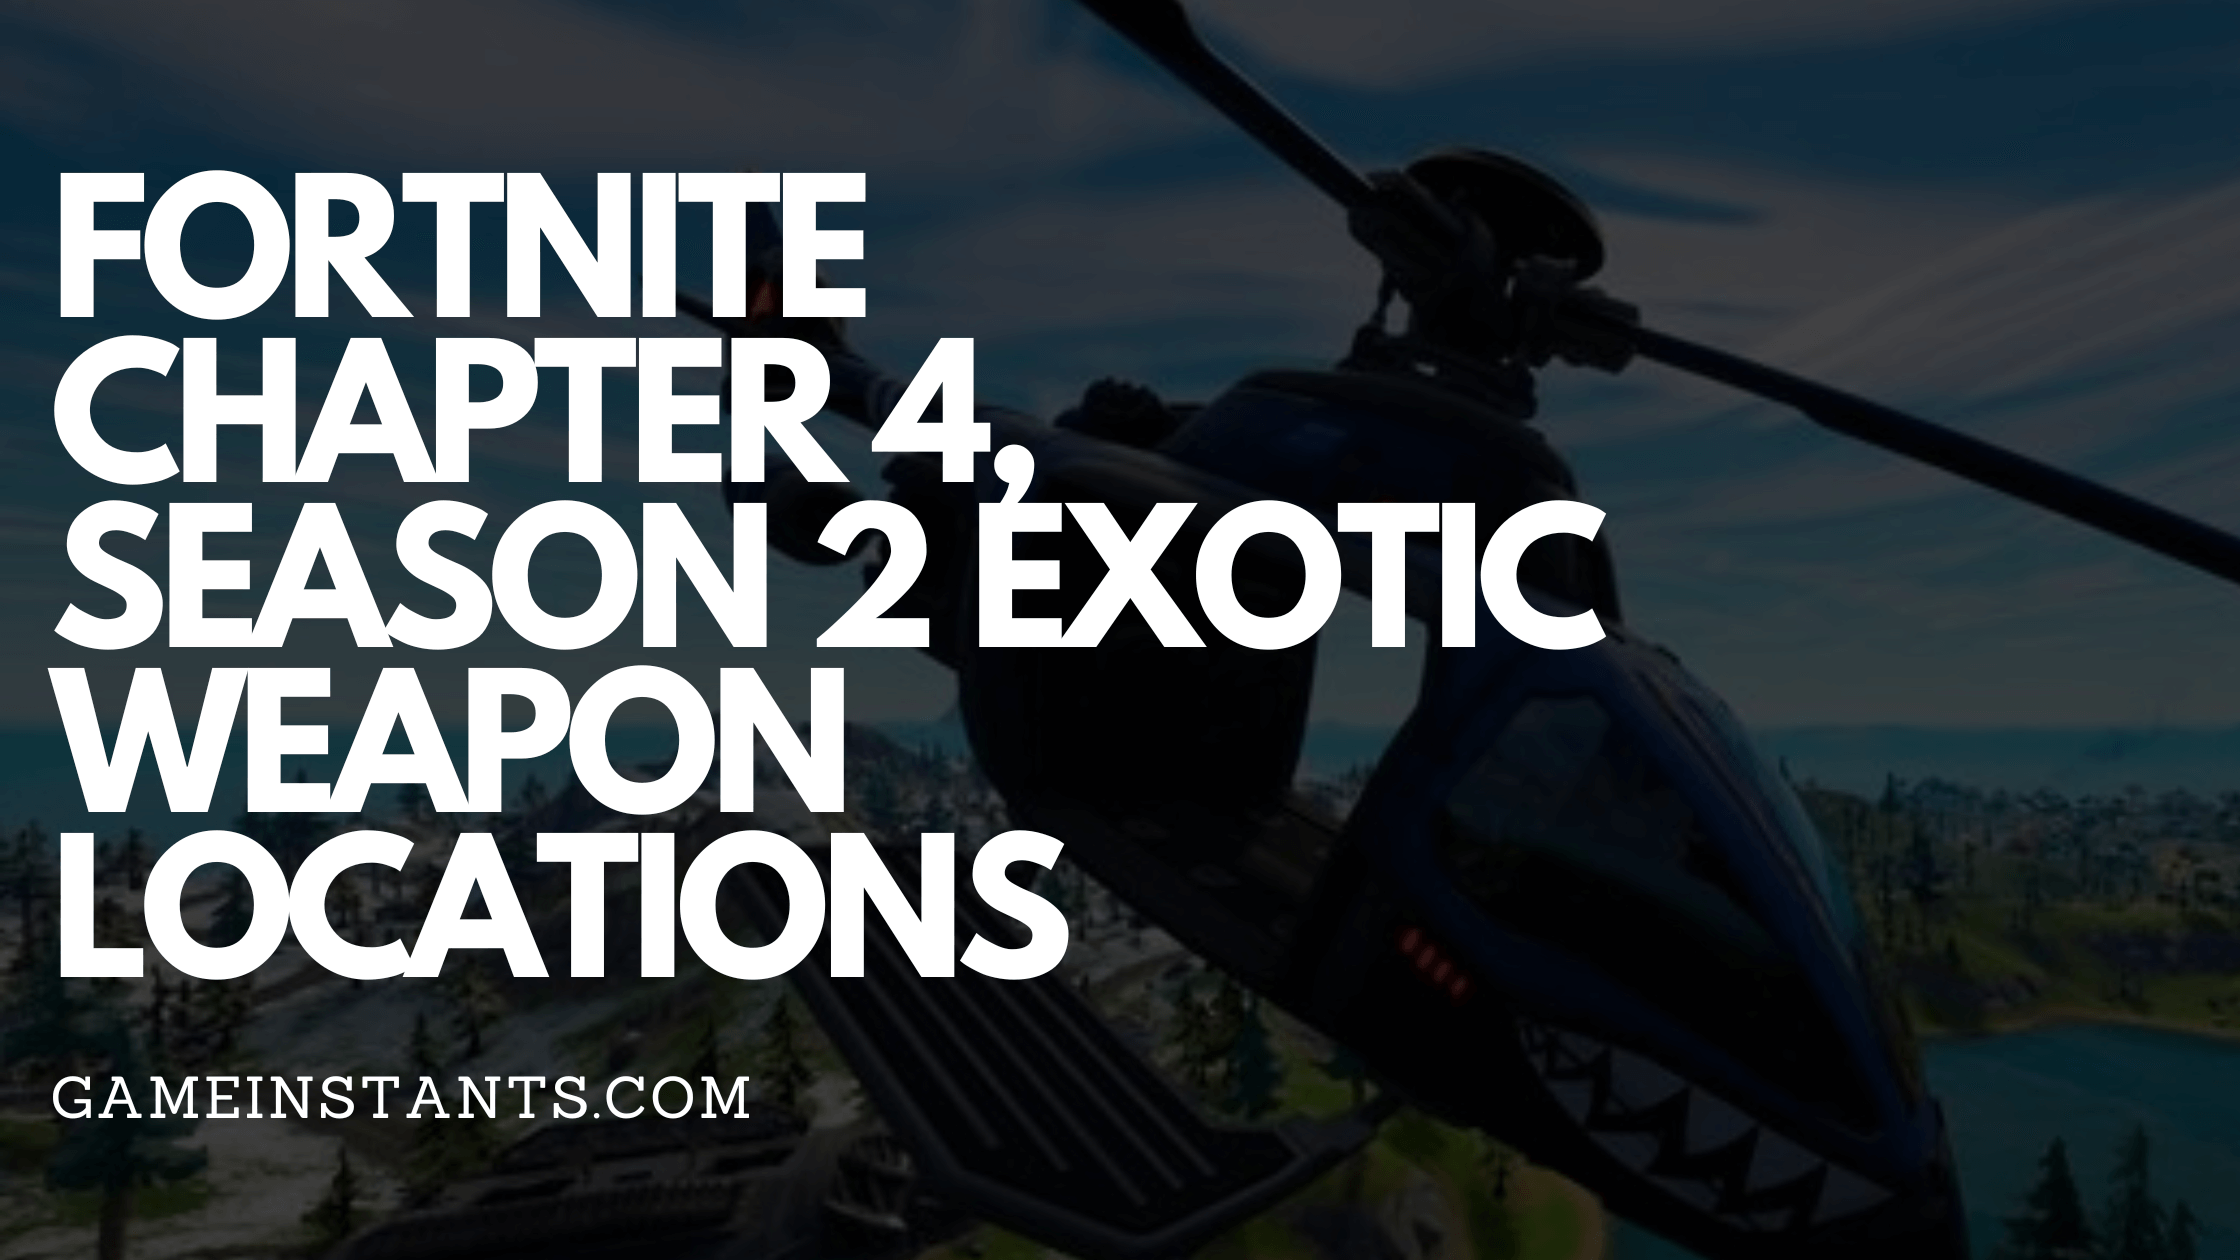 Fortnite Chapter 4, Season 2 Exotic Weapon